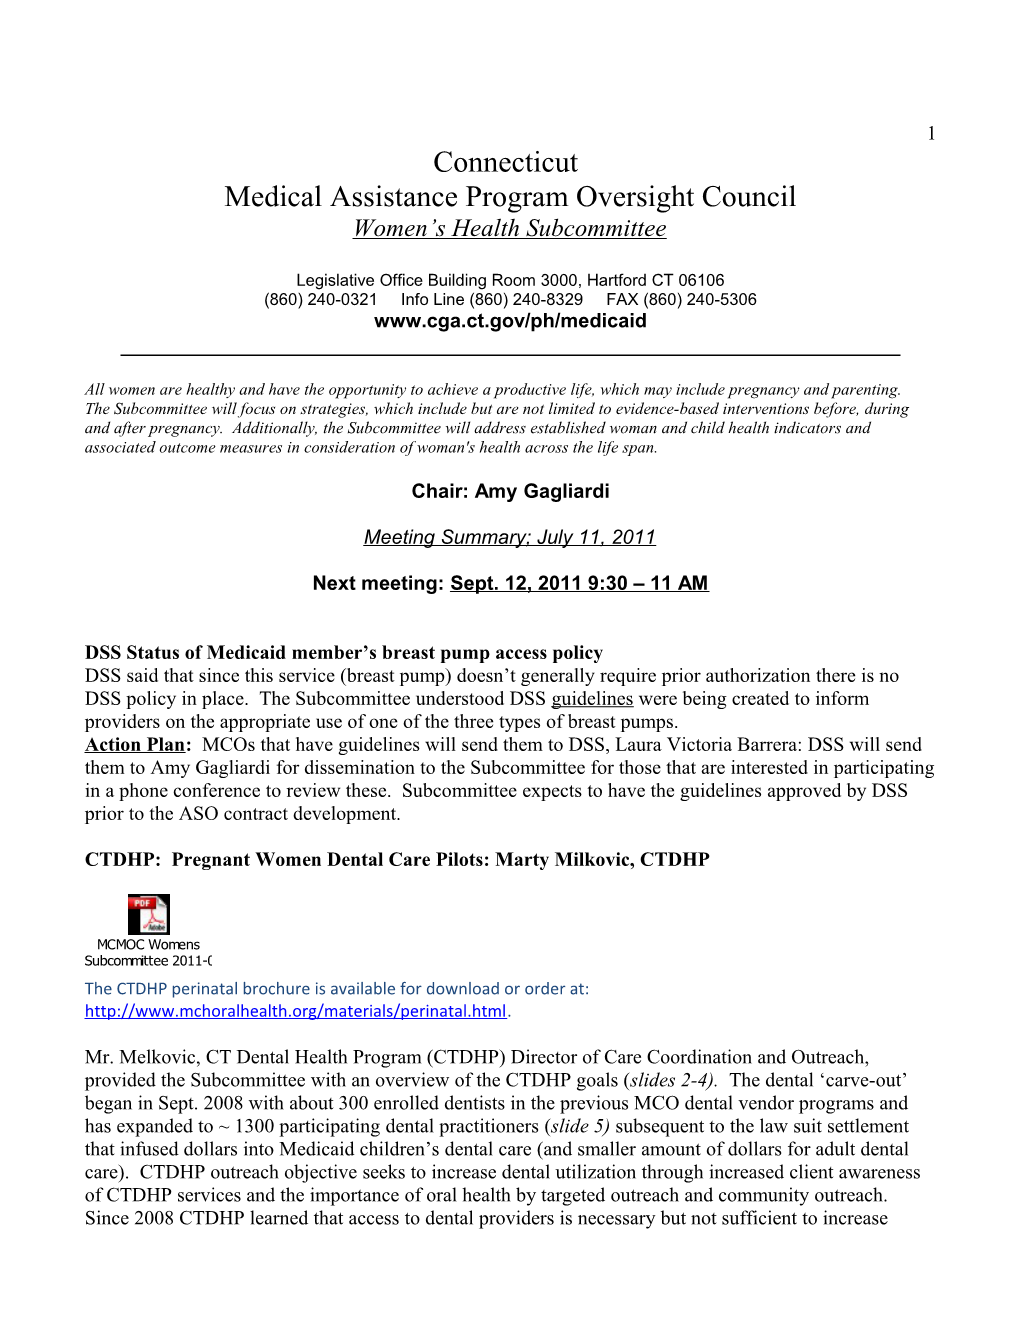 Medical Assistance Program Oversight Council